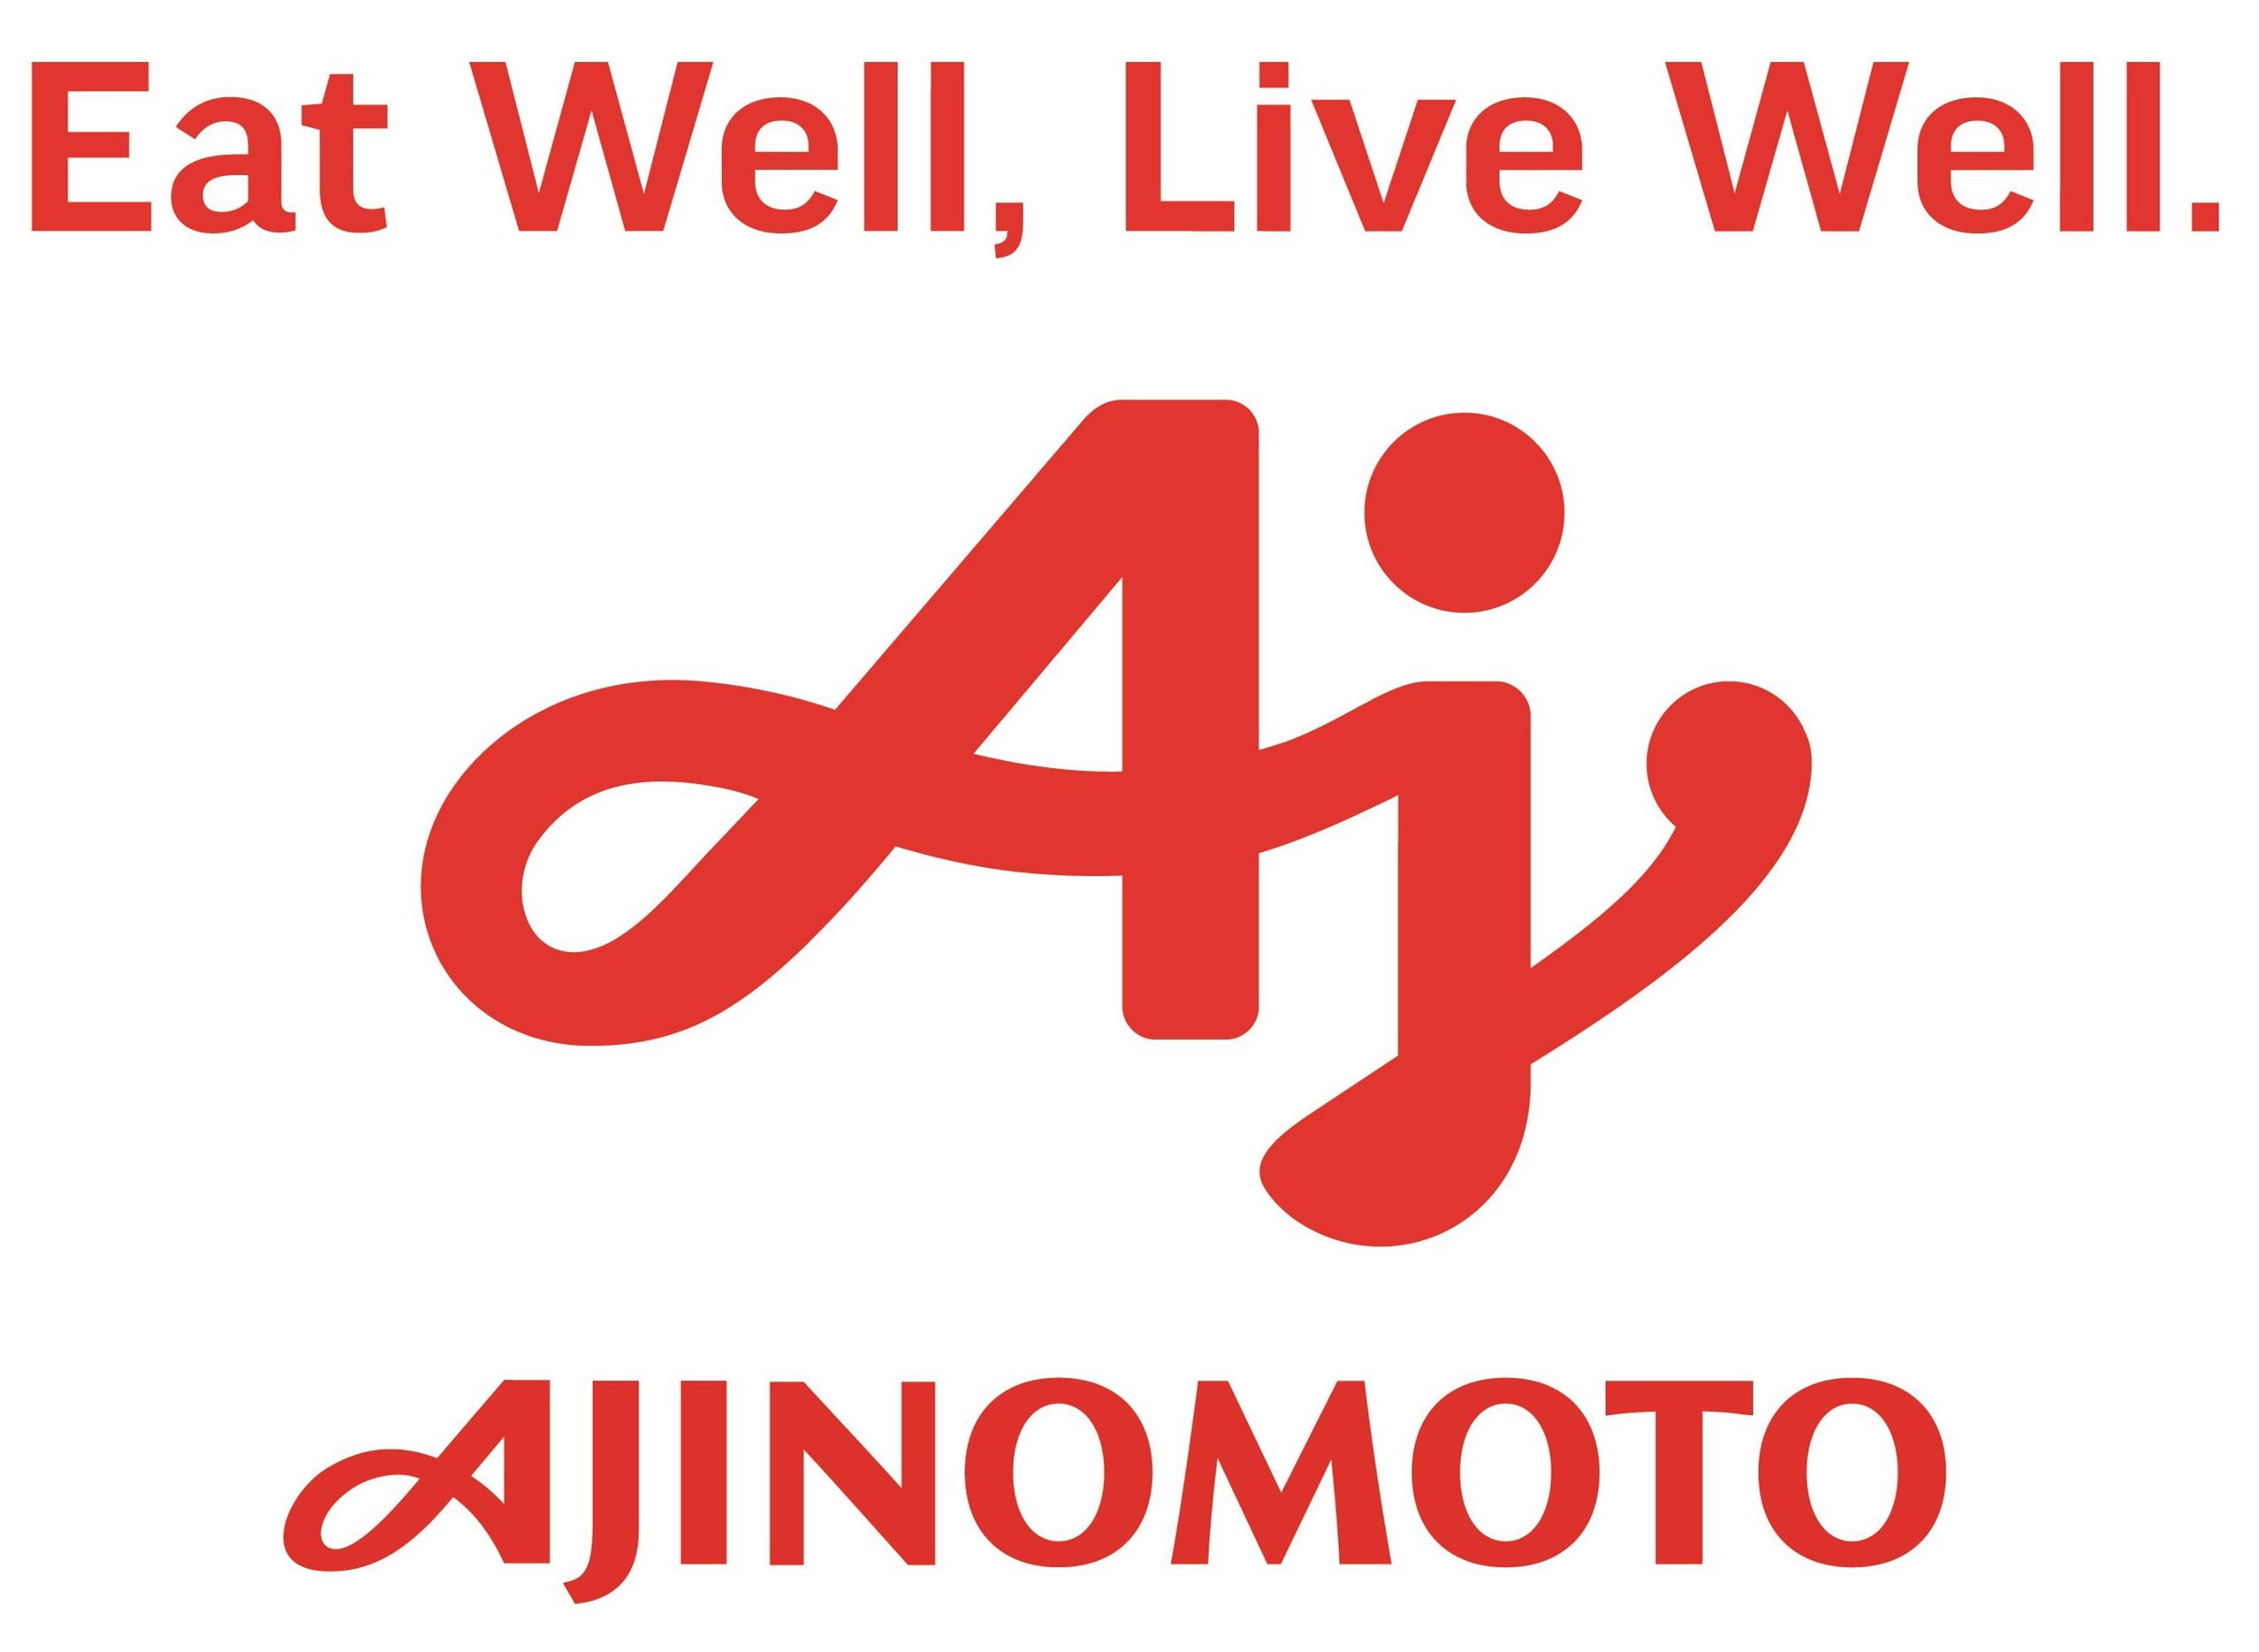  EAT WELL, LIVE WELL. AJ AJINOMOTO